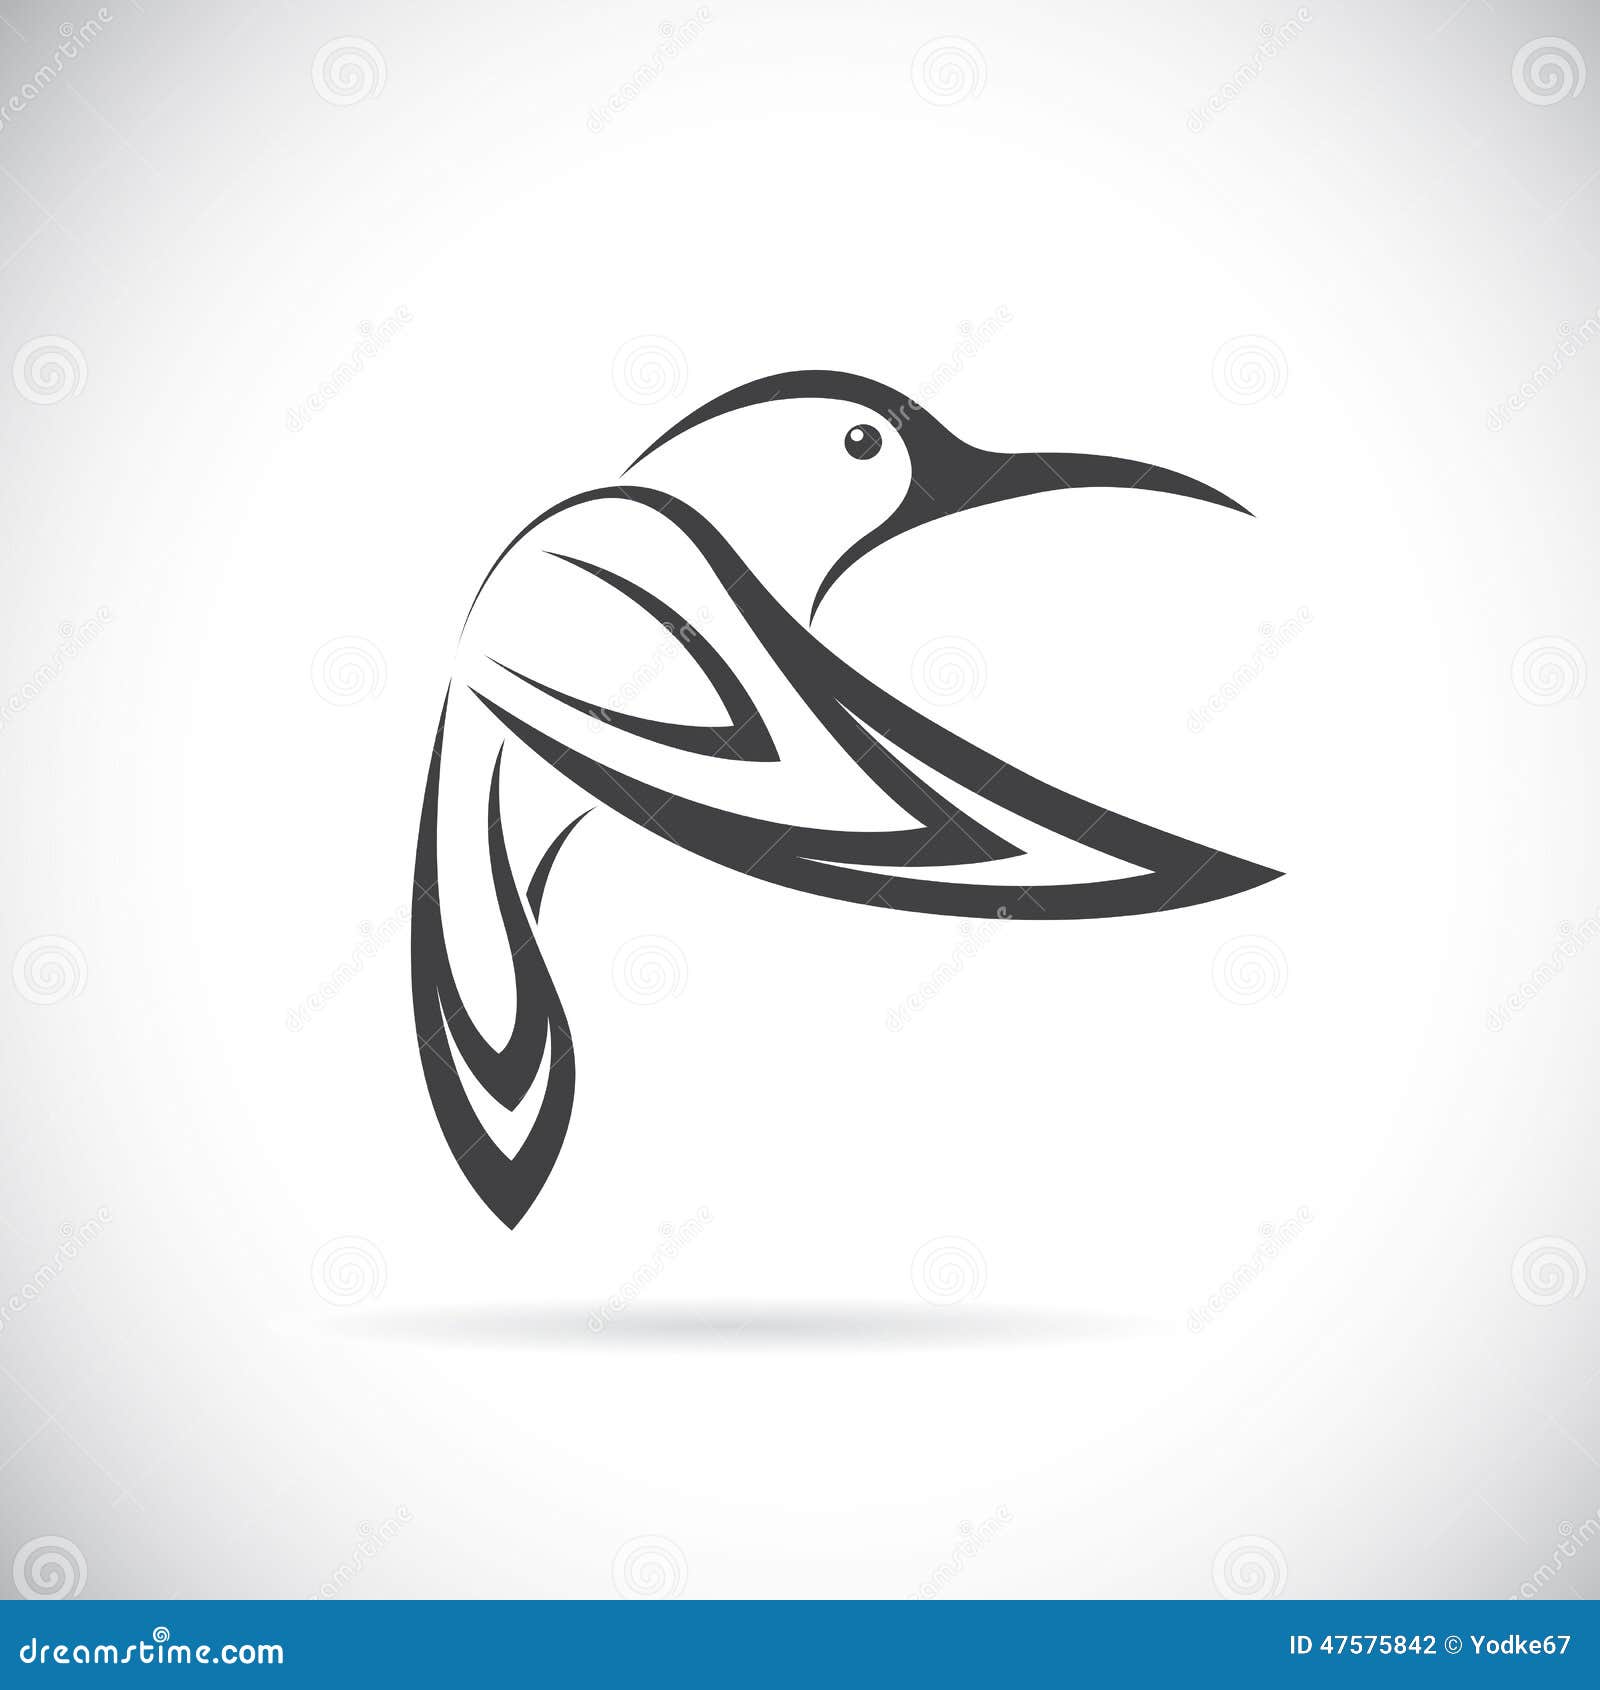 Vector Image of an Hummingbird Design Stock Vector - Illustration of ...